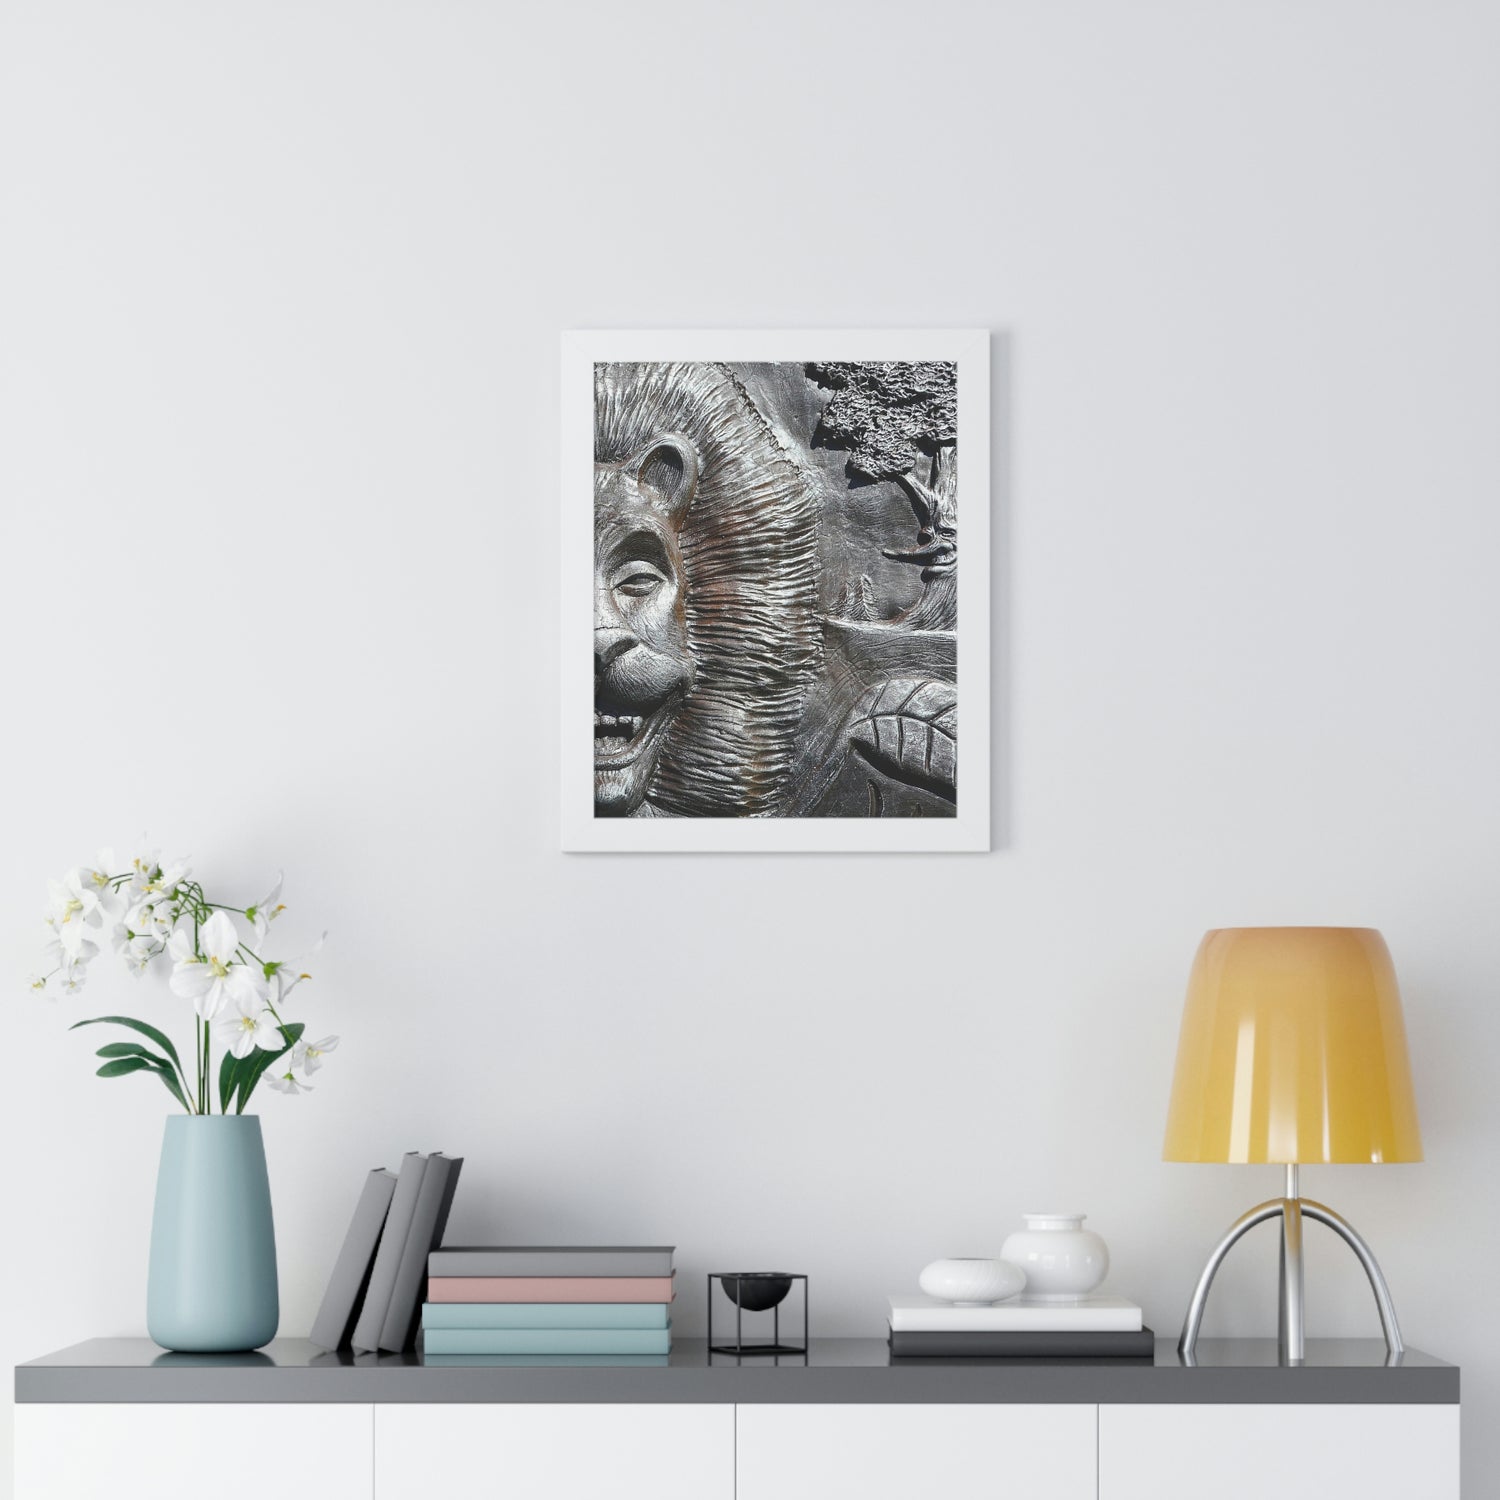 Lion's Friends Forever V3 - Framed Vertical Poster - Fry1Productions